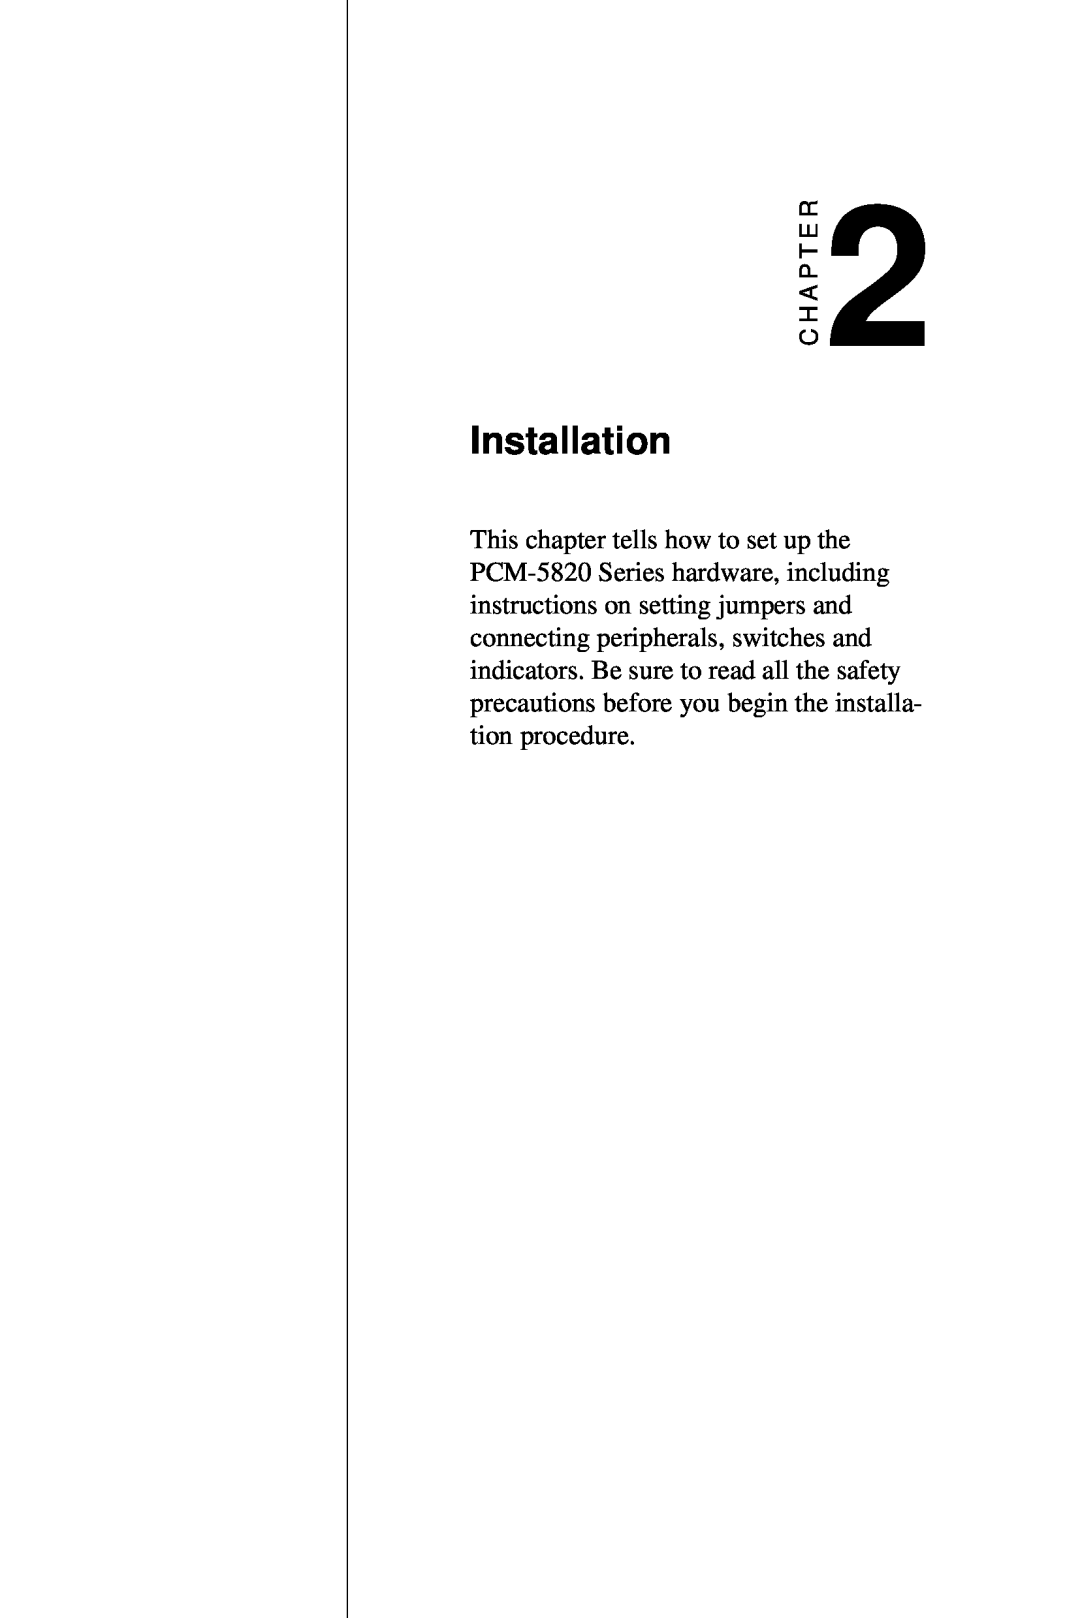 AMD PCM-5820 manual Installation 